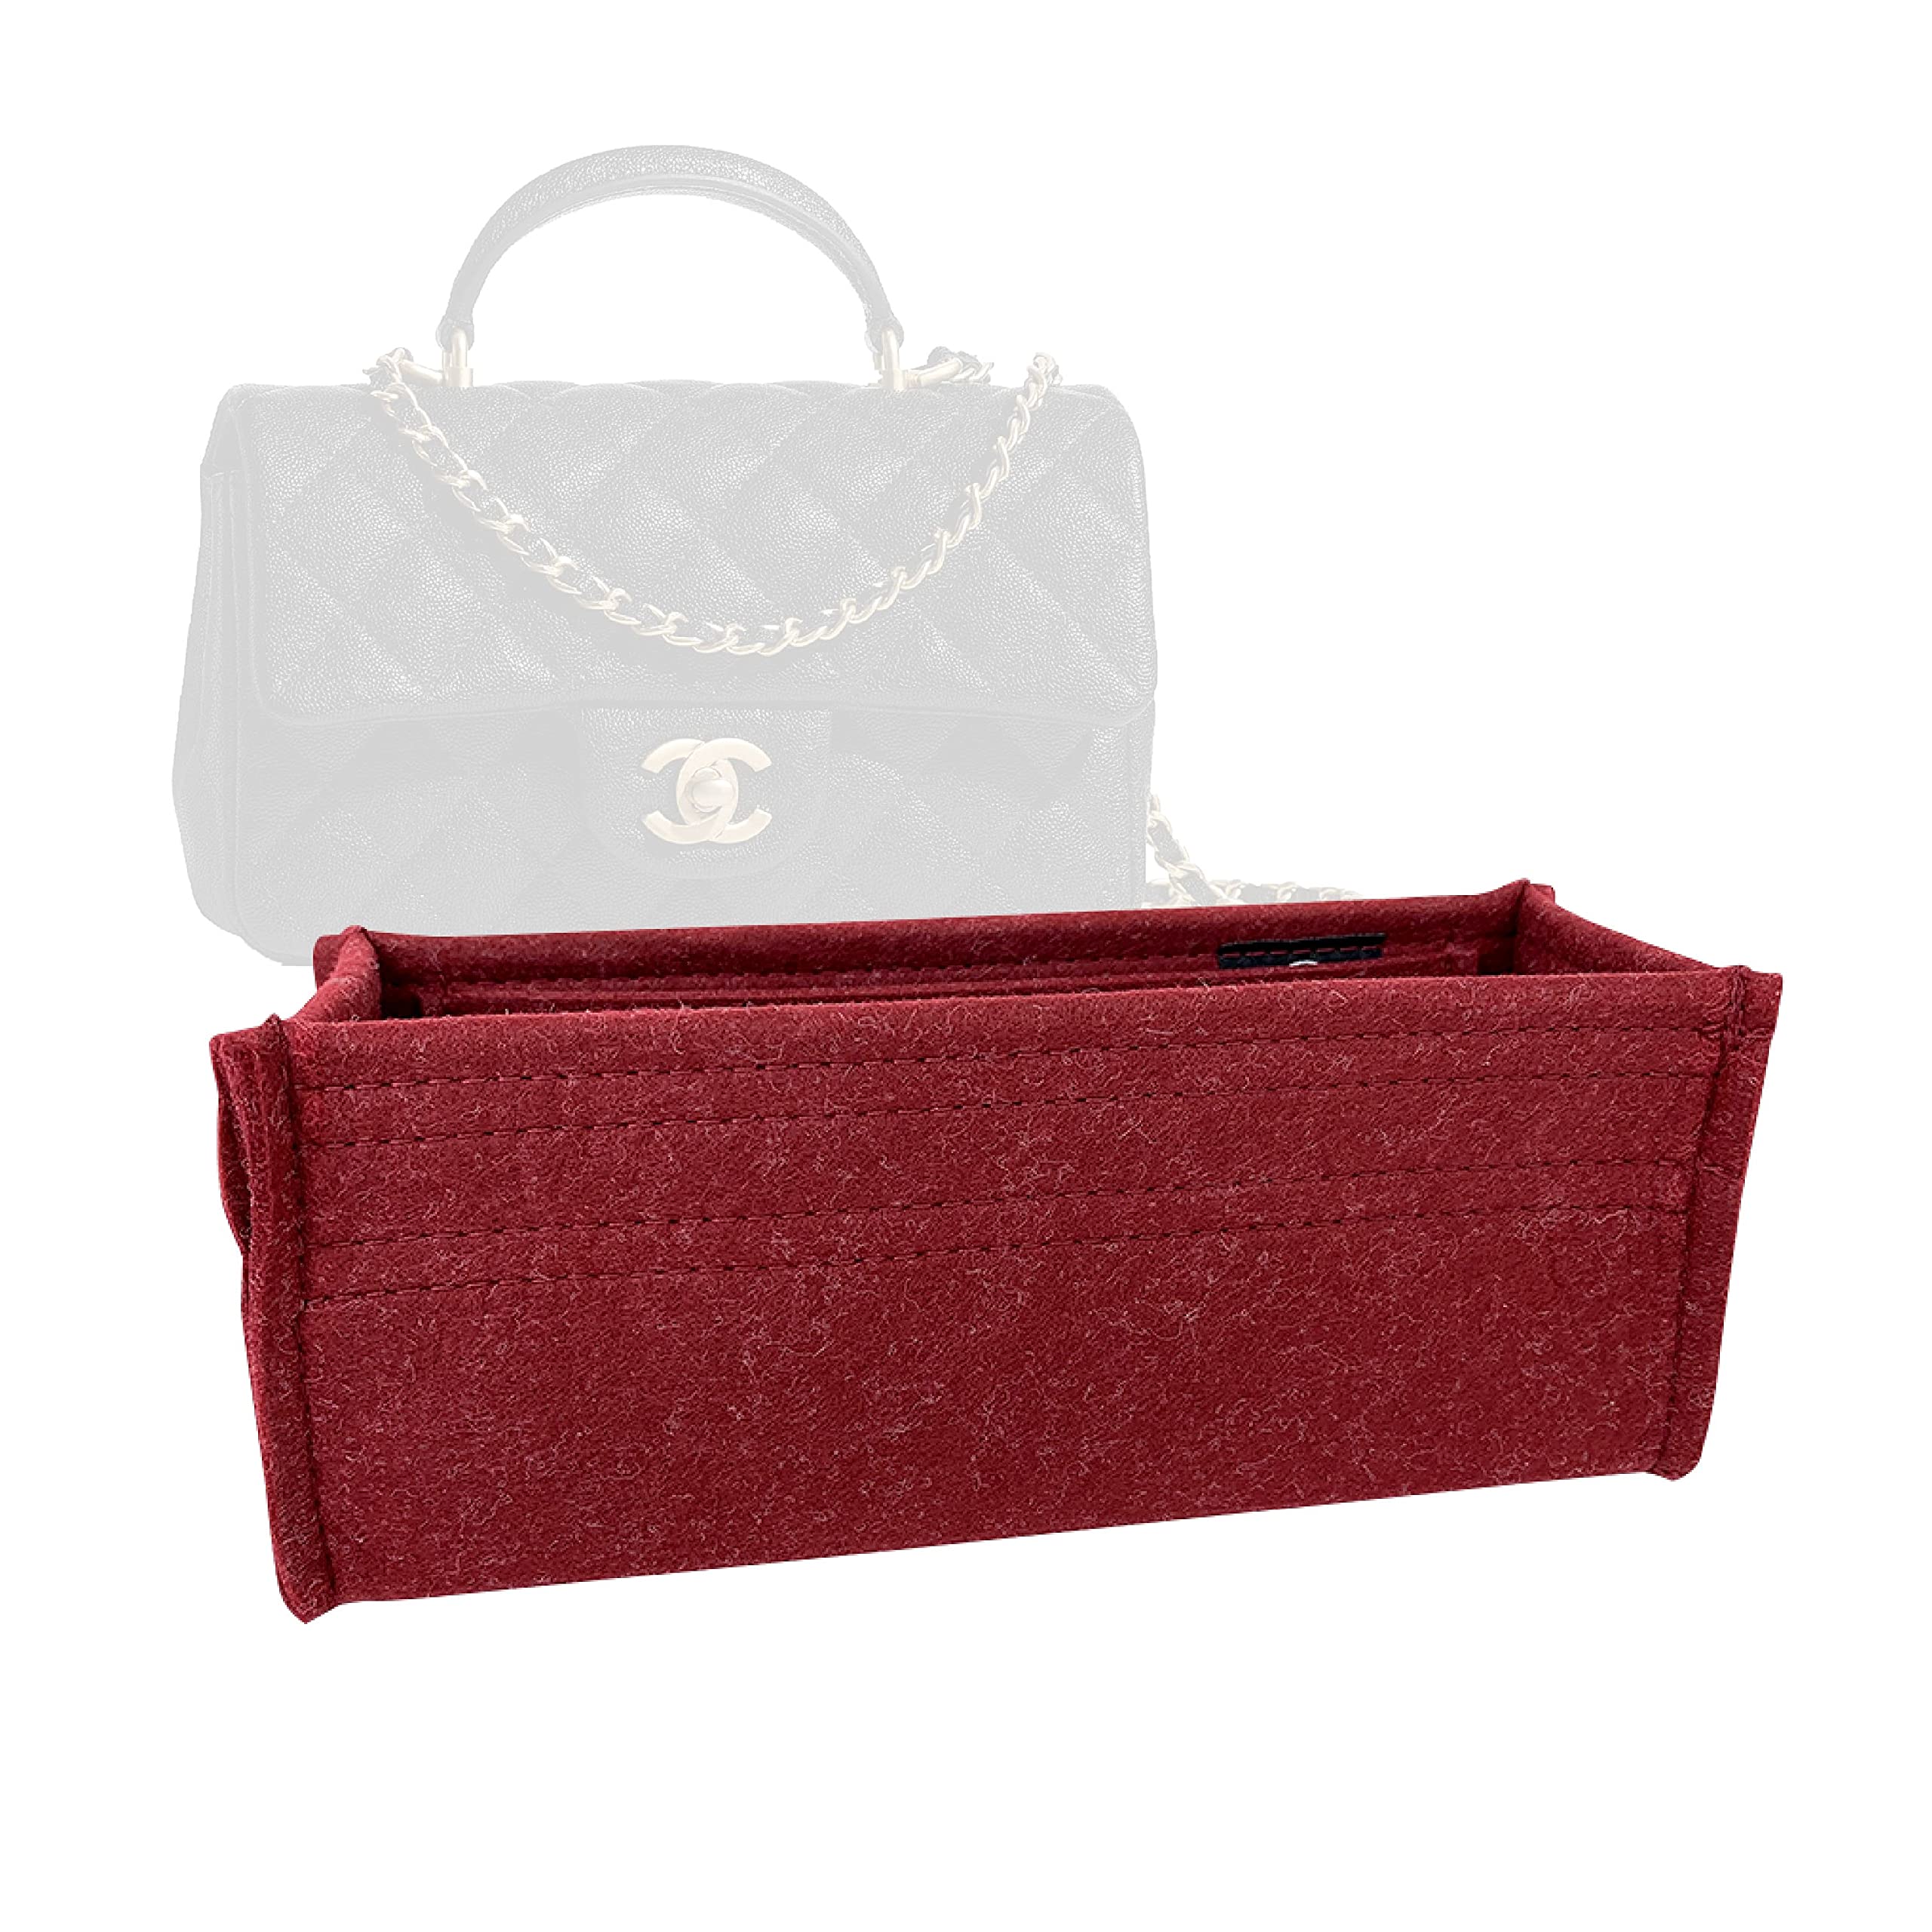 Zoomoni Premium Bag Organizer for Chanel Classic Flap New Mini With Top Handle (20cm) (Handmade/20 Color Options) [Purse Organiser, Liner, Insert, Shaper]